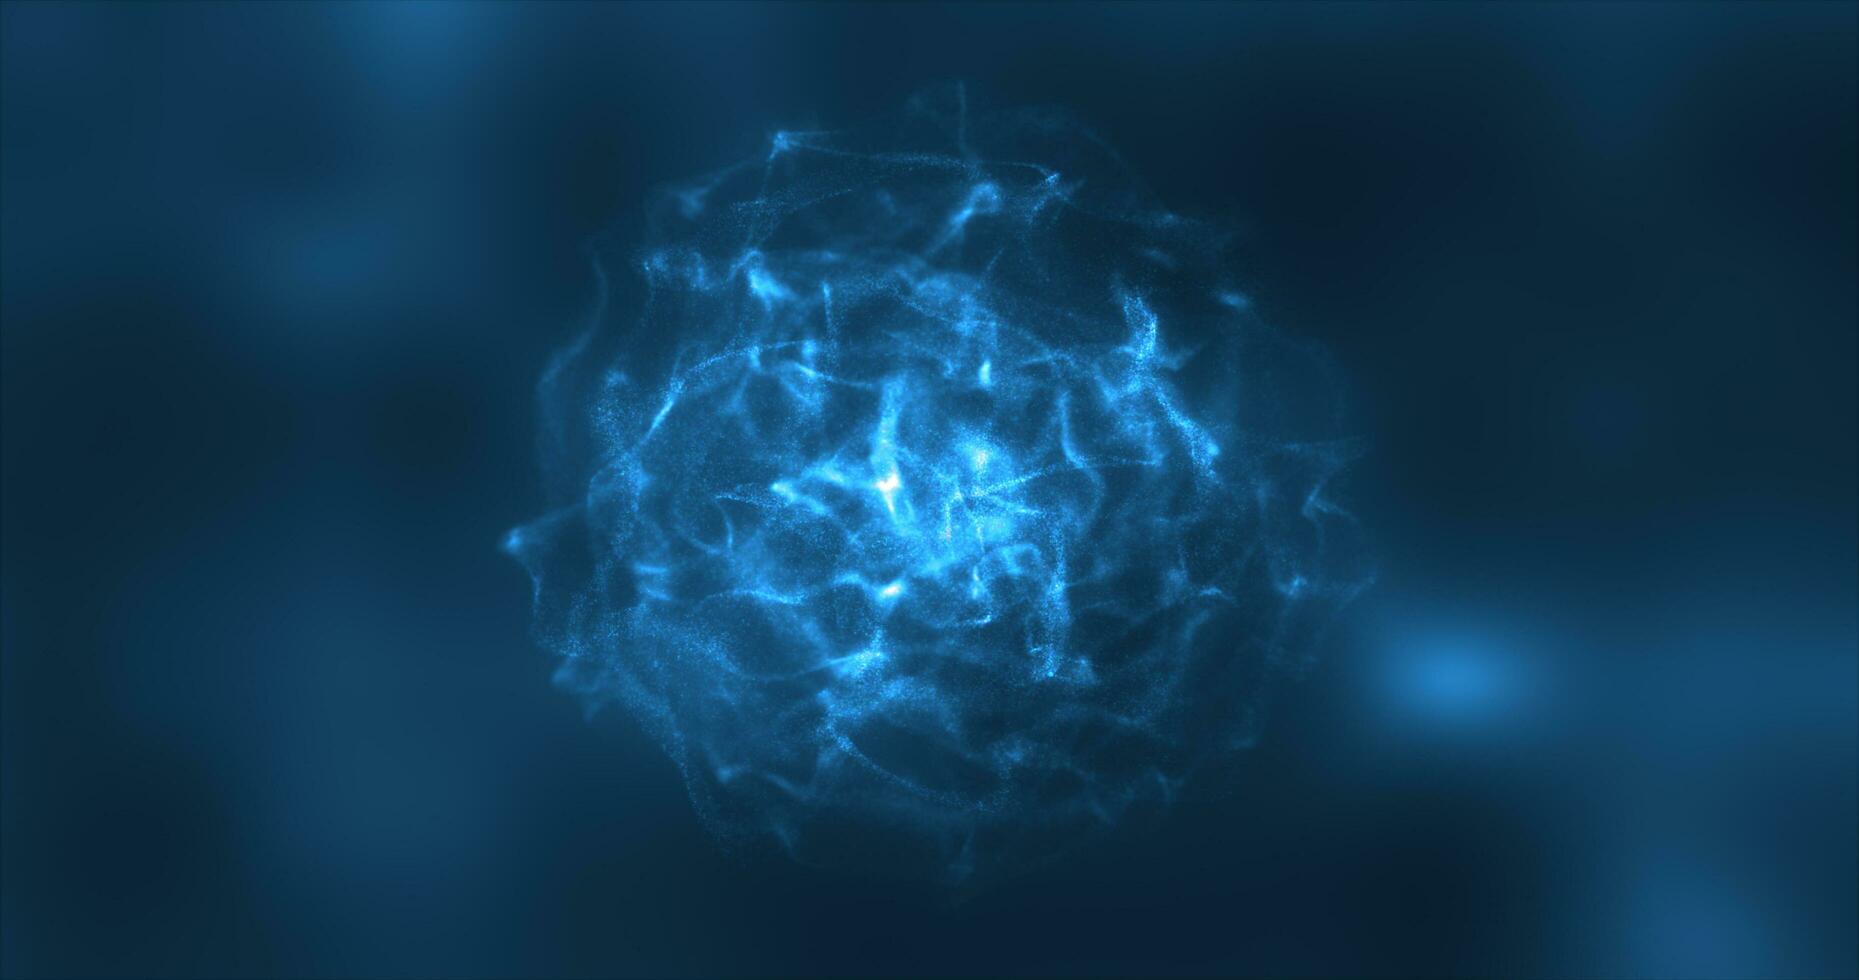 abstrato azul energia volta esfera brilhando com partícula ondas oi-tech digital Magia abstrato fundo foto